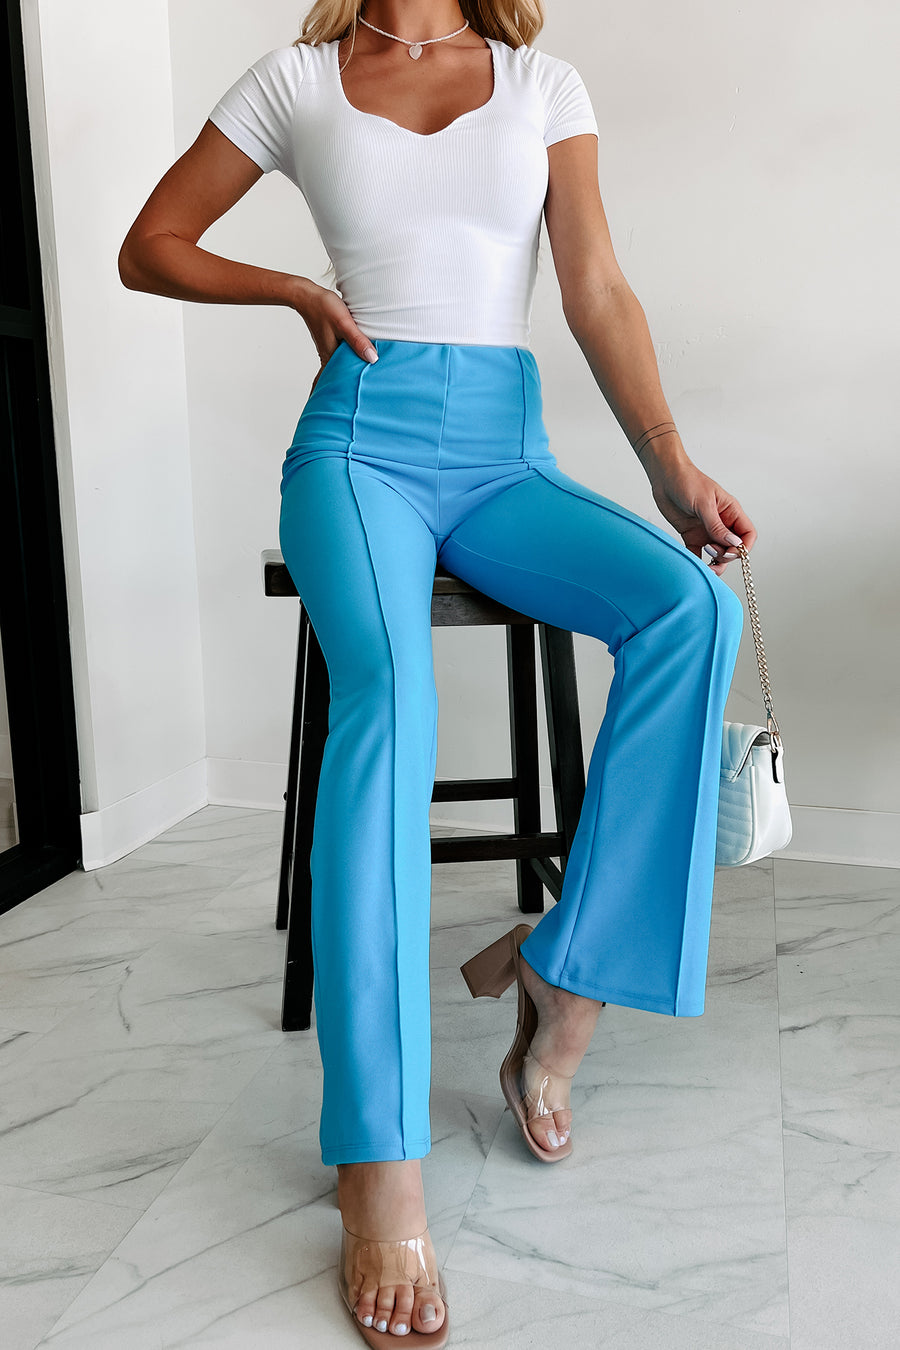 Style Stance High Waist Flare Pants (Aqua Blue)